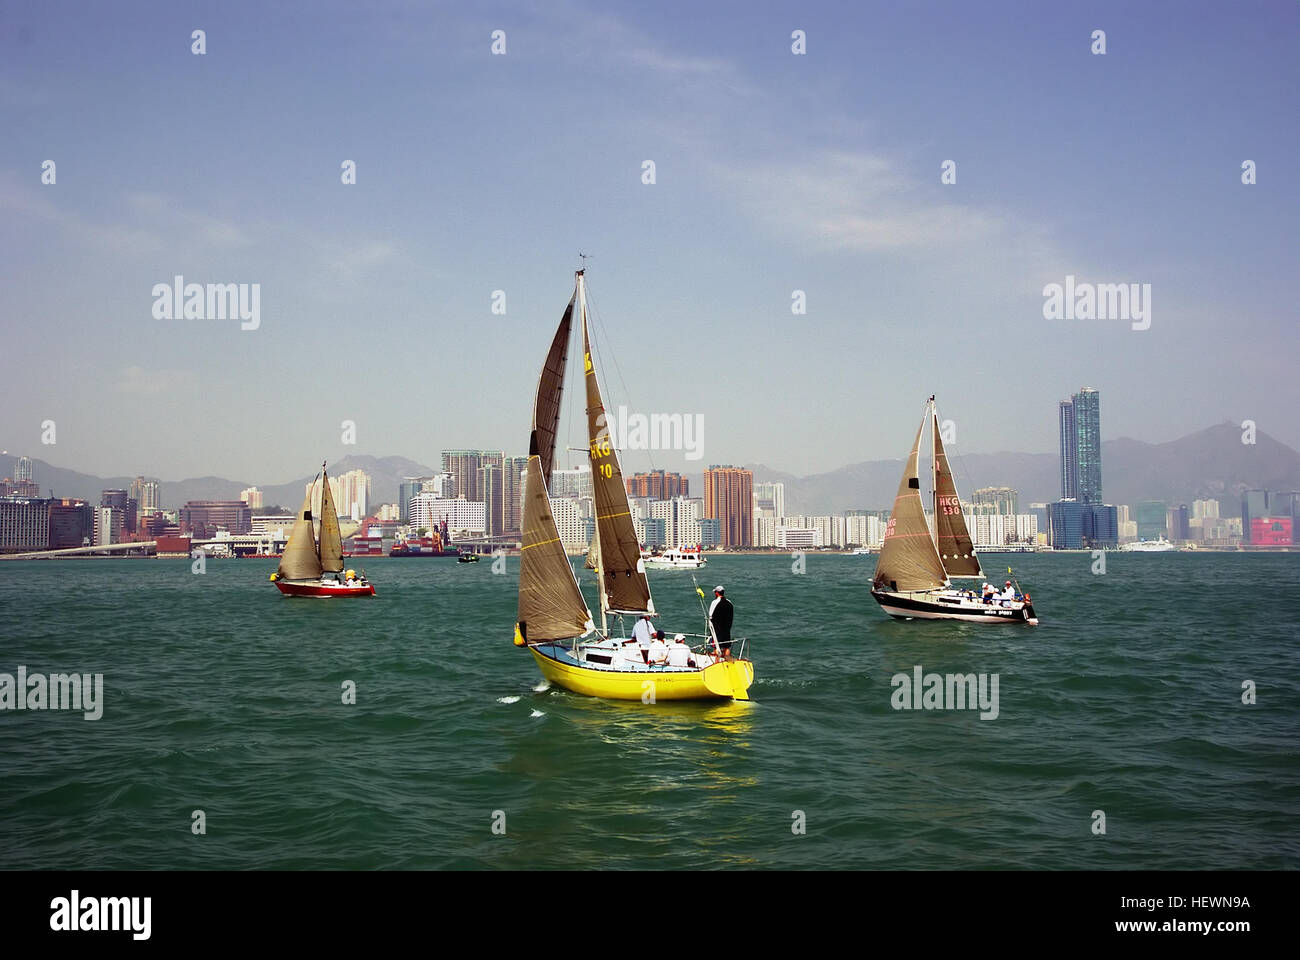 Appropr iat (,), Cina, Hong Kong,l'Isola di Hong Kong,Sony DSLR A300, barche a vela Foto Stock